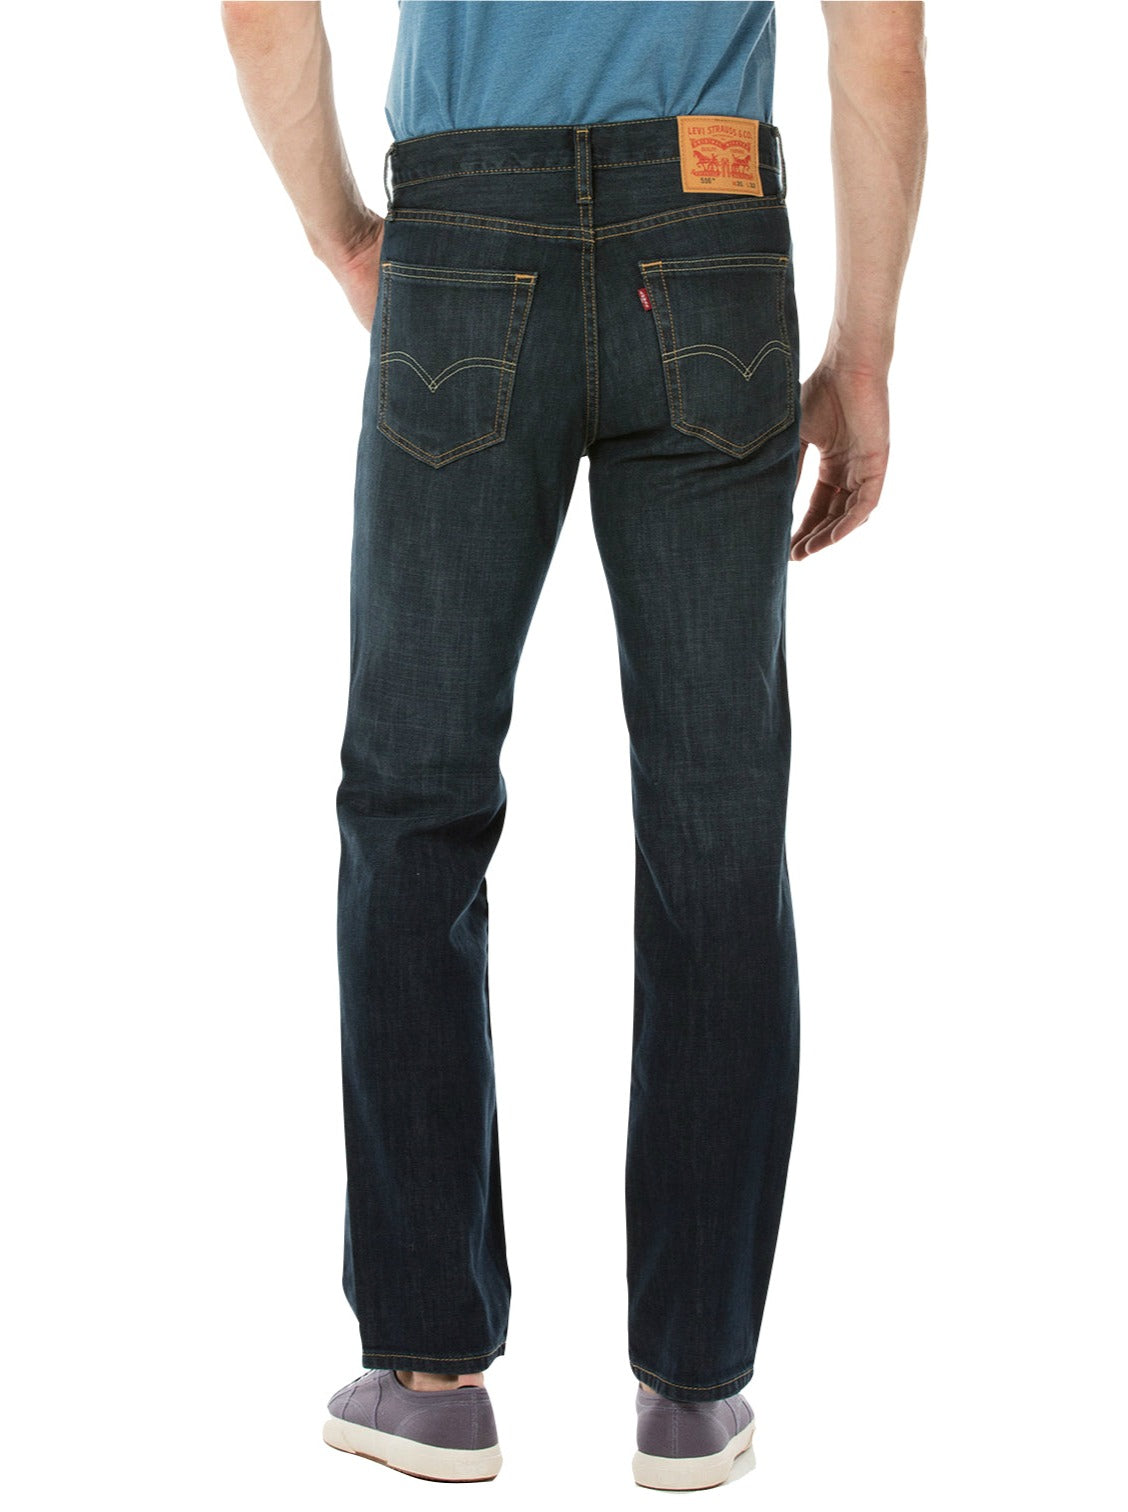 Levi's - 516 Straight Fit Jeans - Dark Petrol | eBay